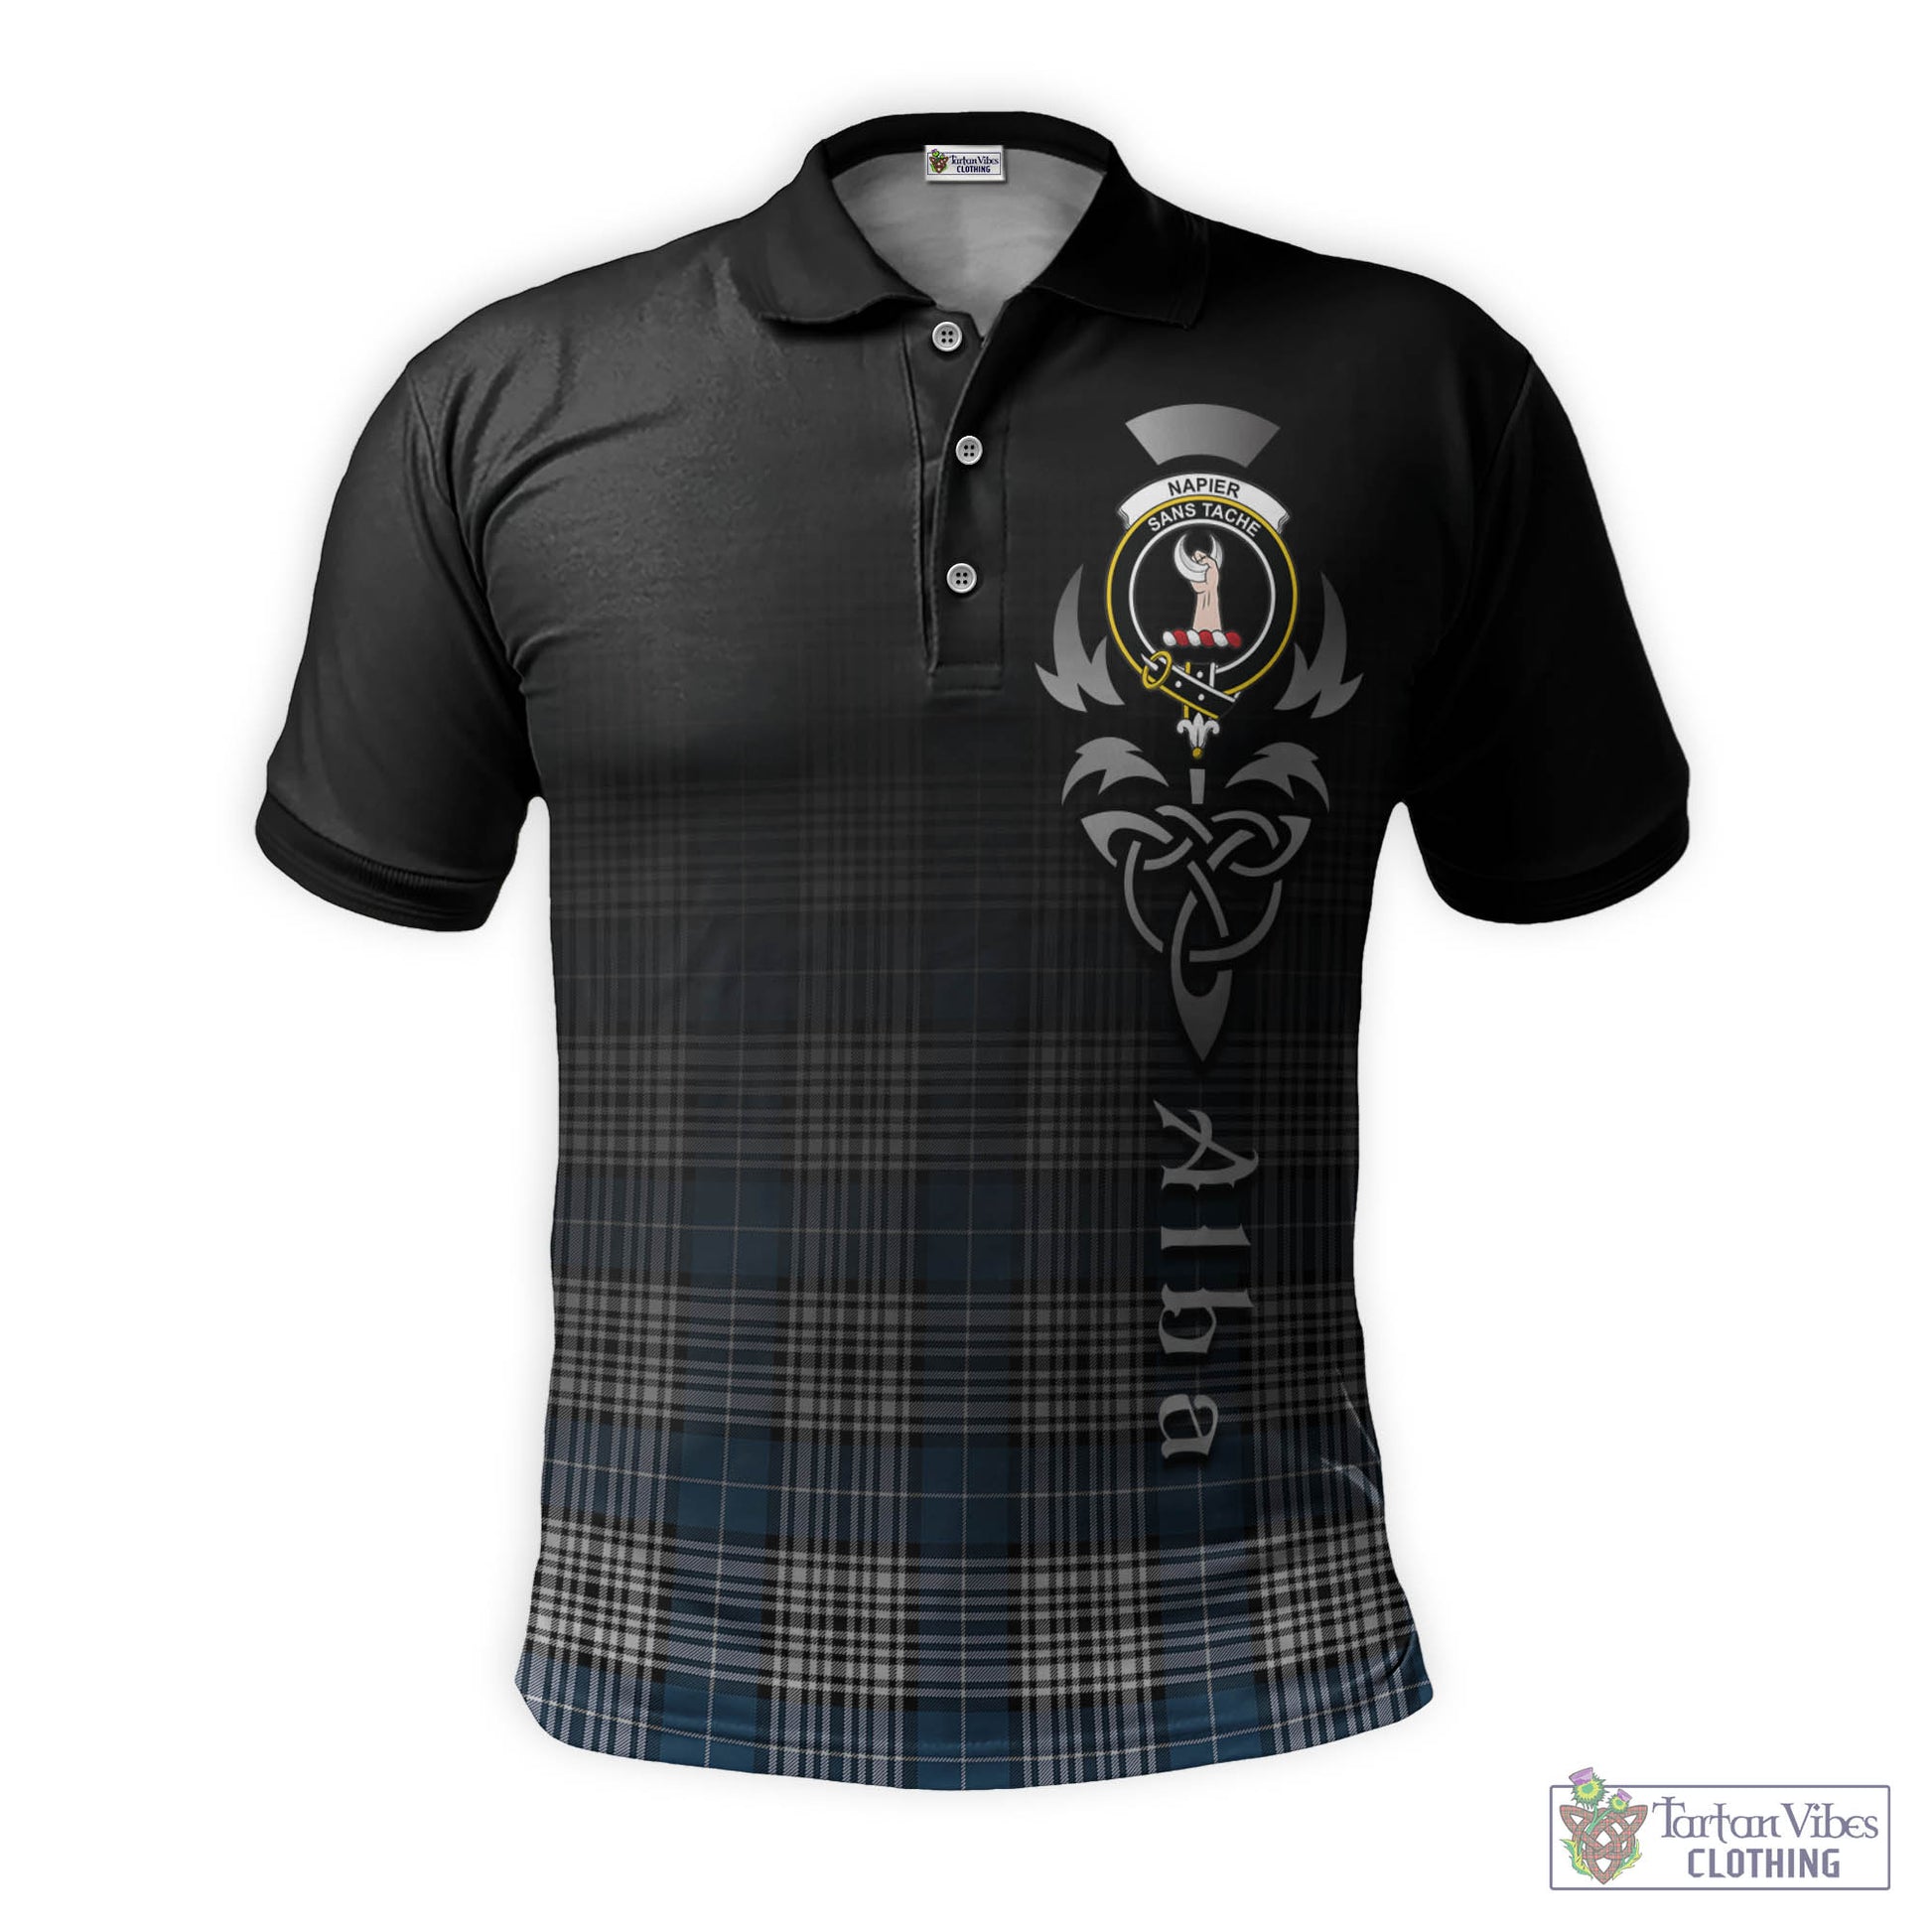 Tartan Vibes Clothing Napier Modern Tartan Polo Shirt Featuring Alba Gu Brath Family Crest Celtic Inspired